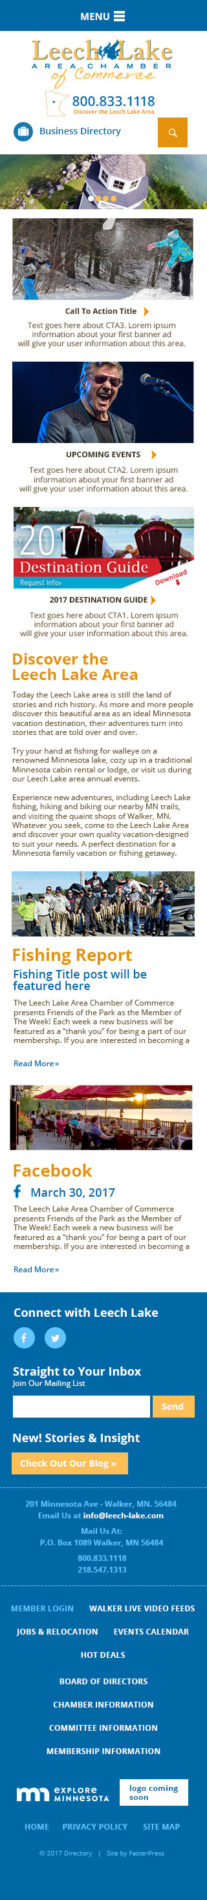 Leech Lake Area Chamber of Commerce - Mobile